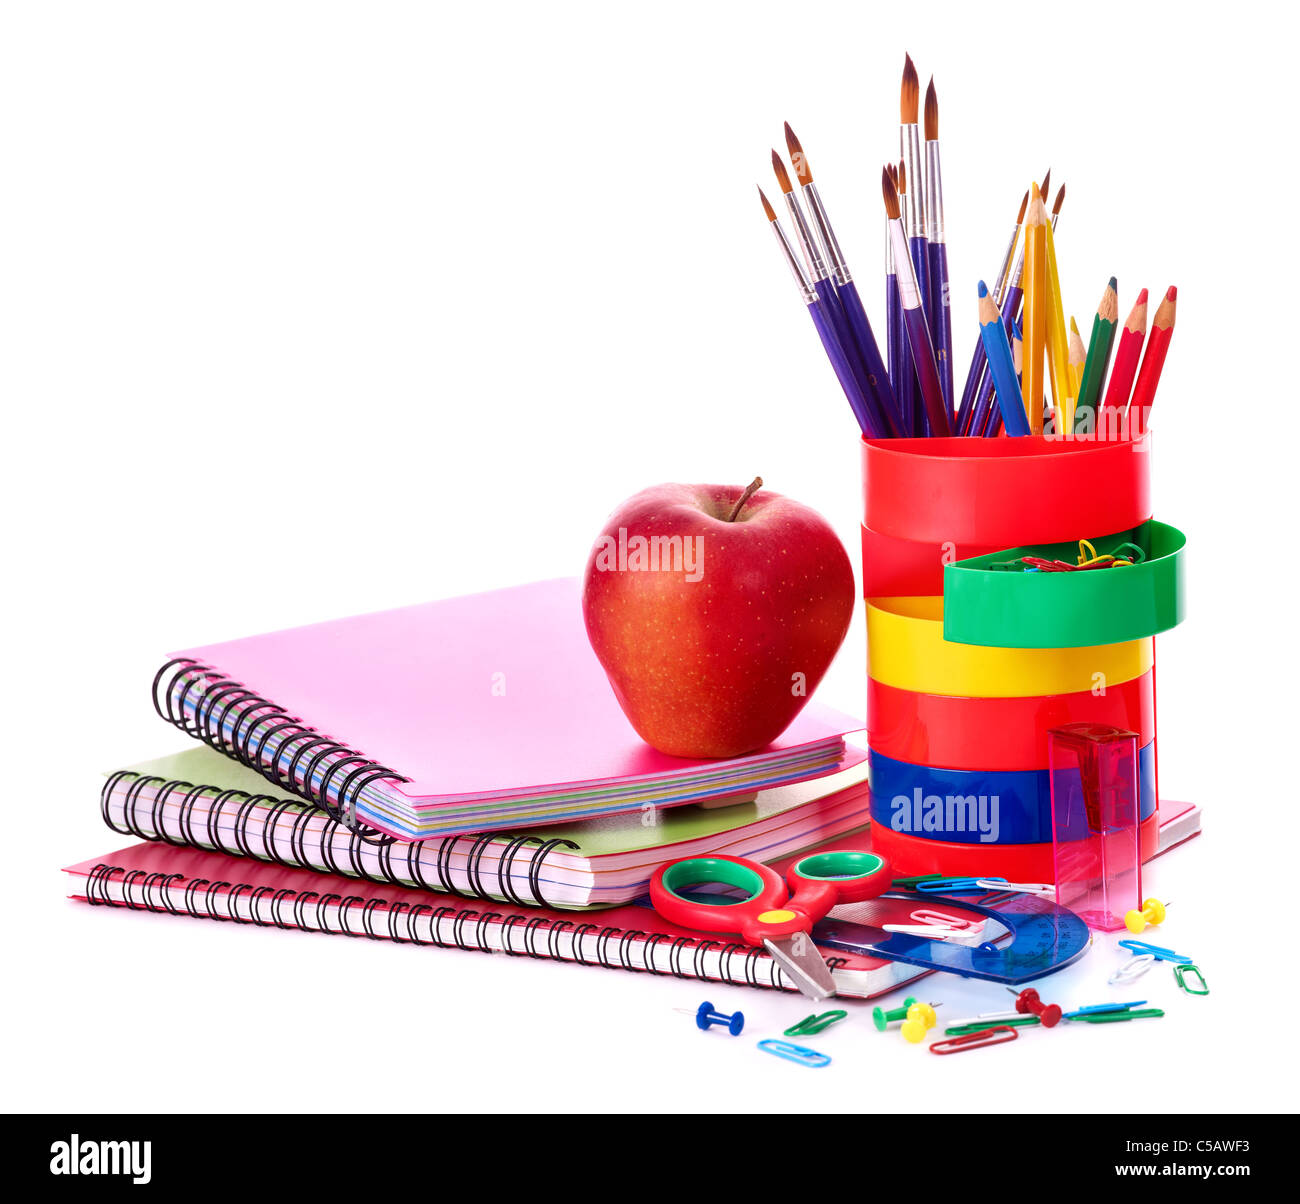 School office supplies. Writing utensils Stock Photo - Alamy